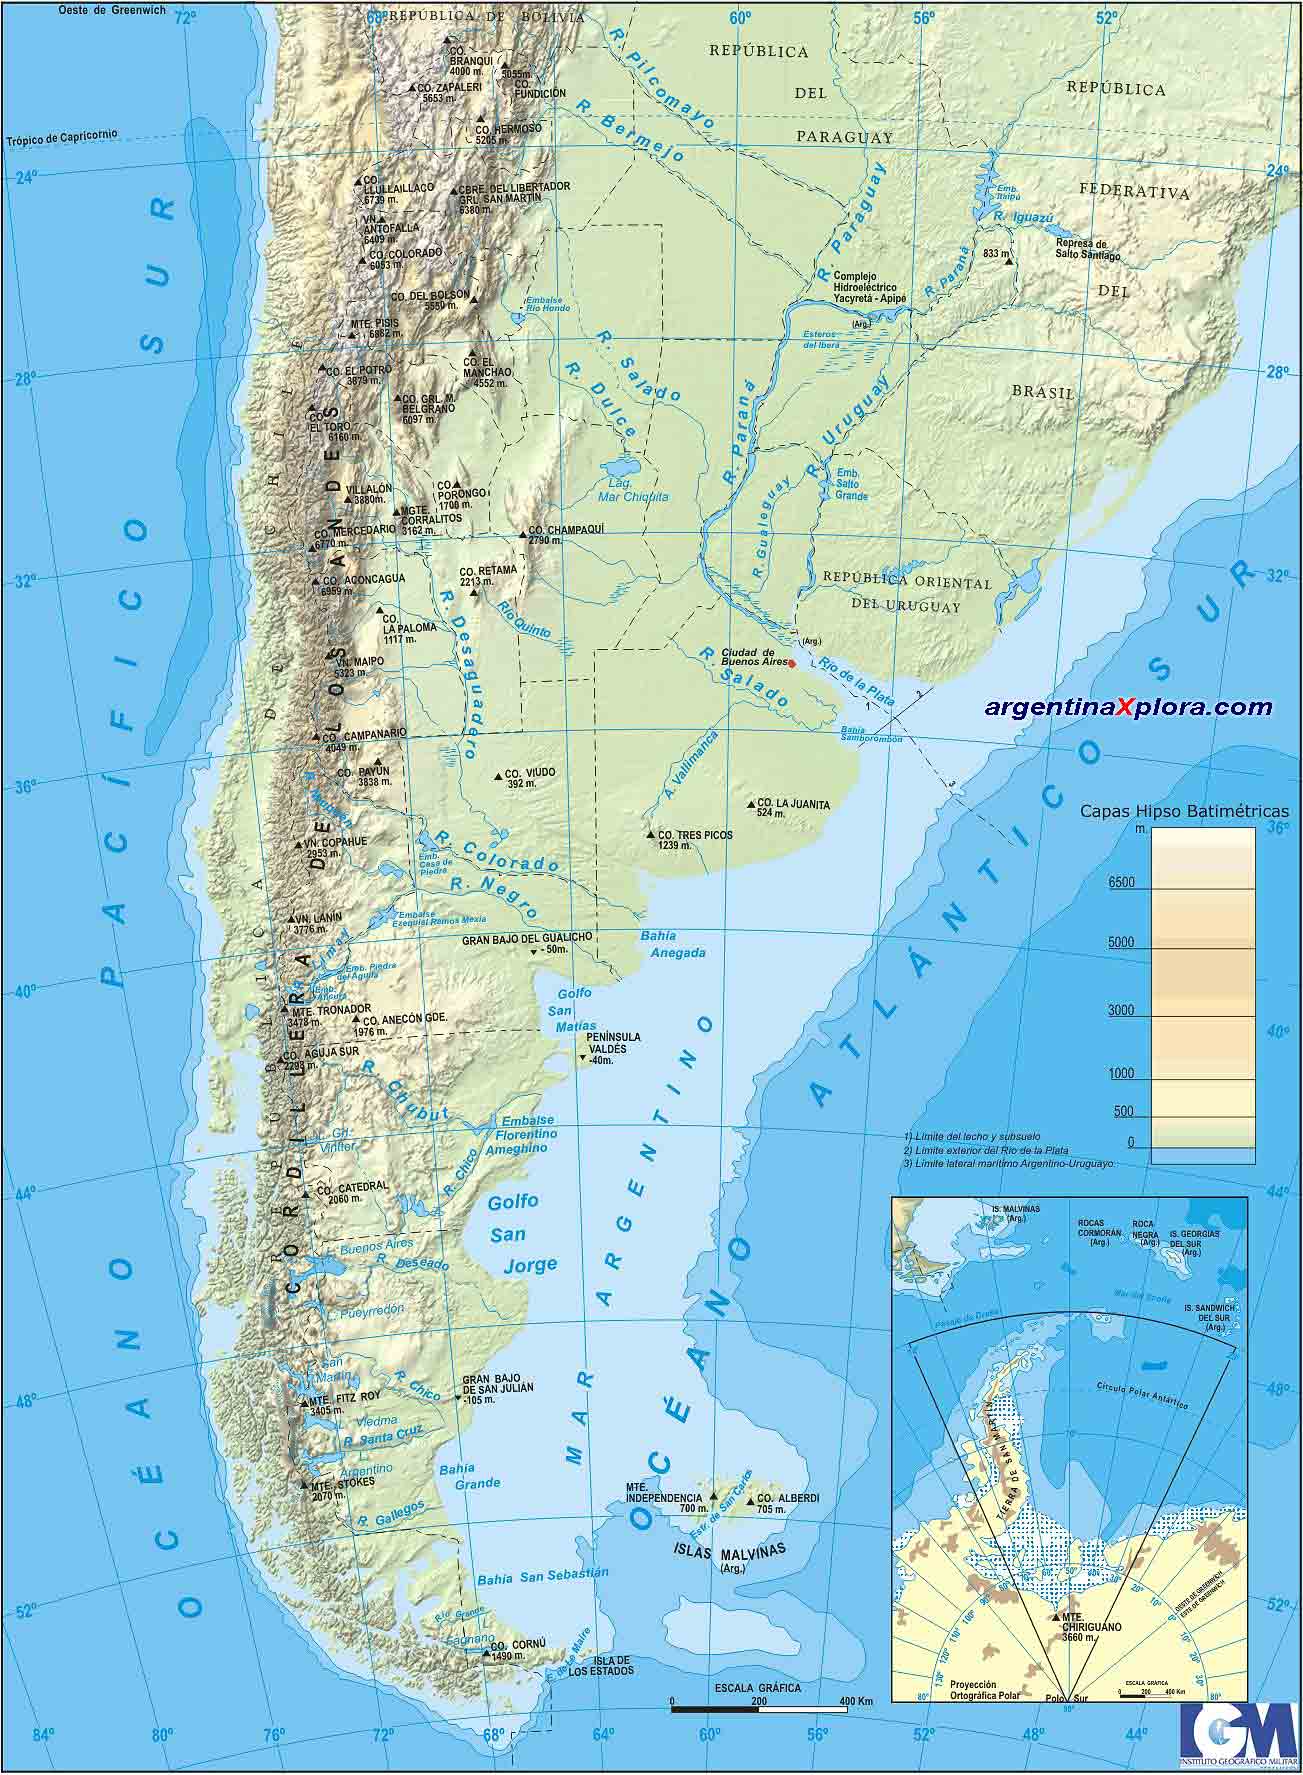 Argentina Phisycal Map